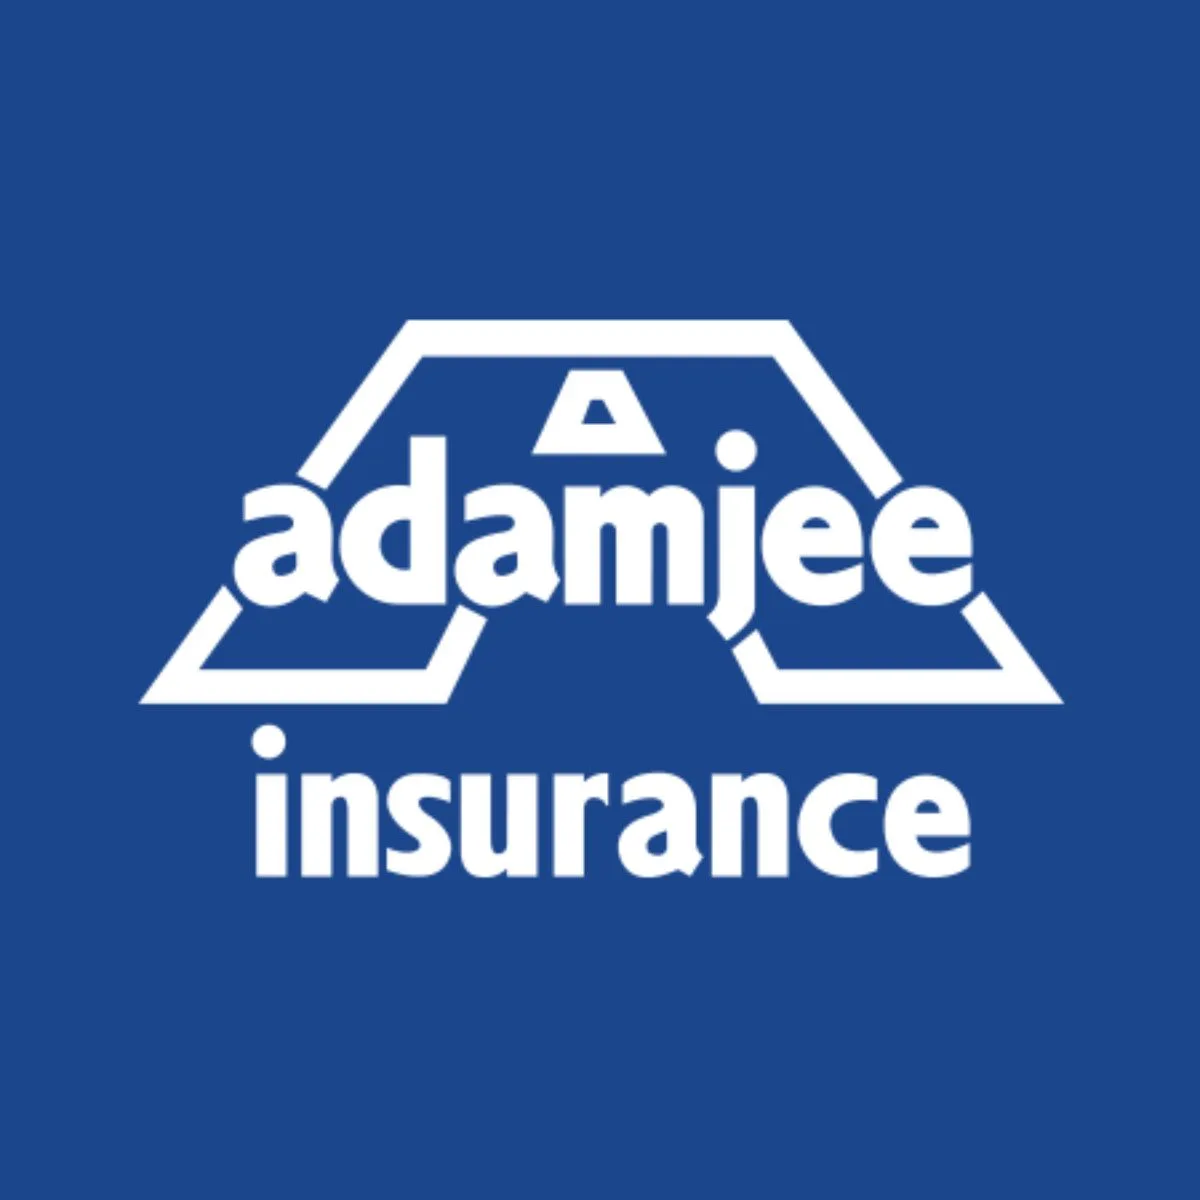 Adamjee Insurance Company Limited